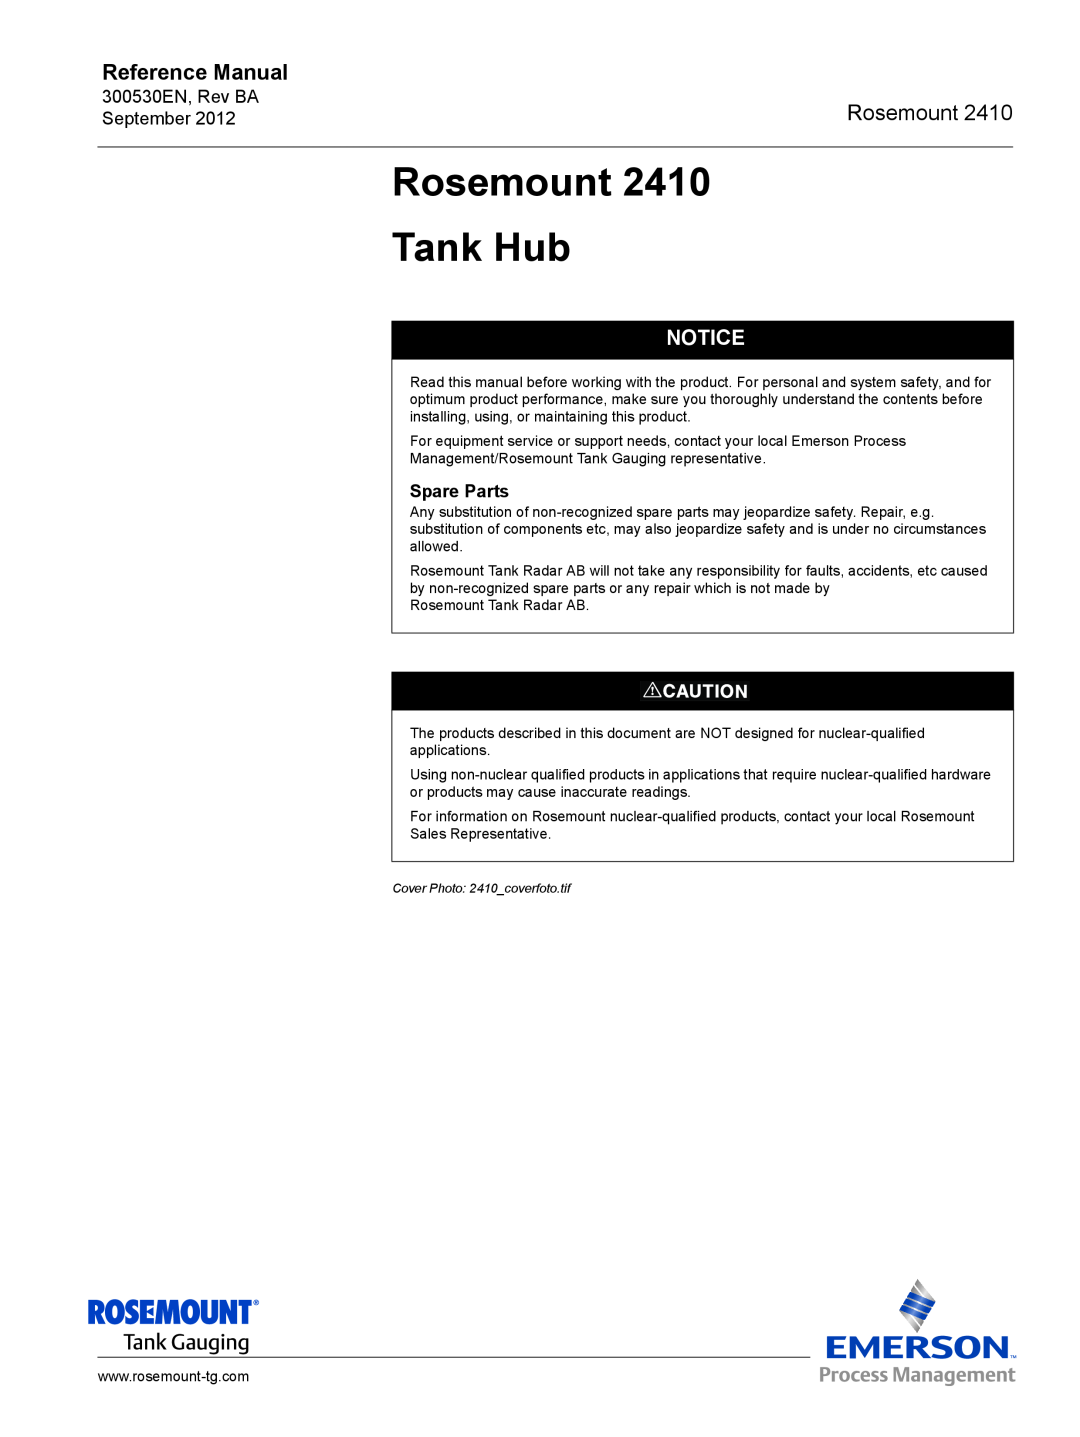 Emerson Process Management Rosemount 2410 manual Rosemount Tank Hub, Spare Parts, Reference Manual 